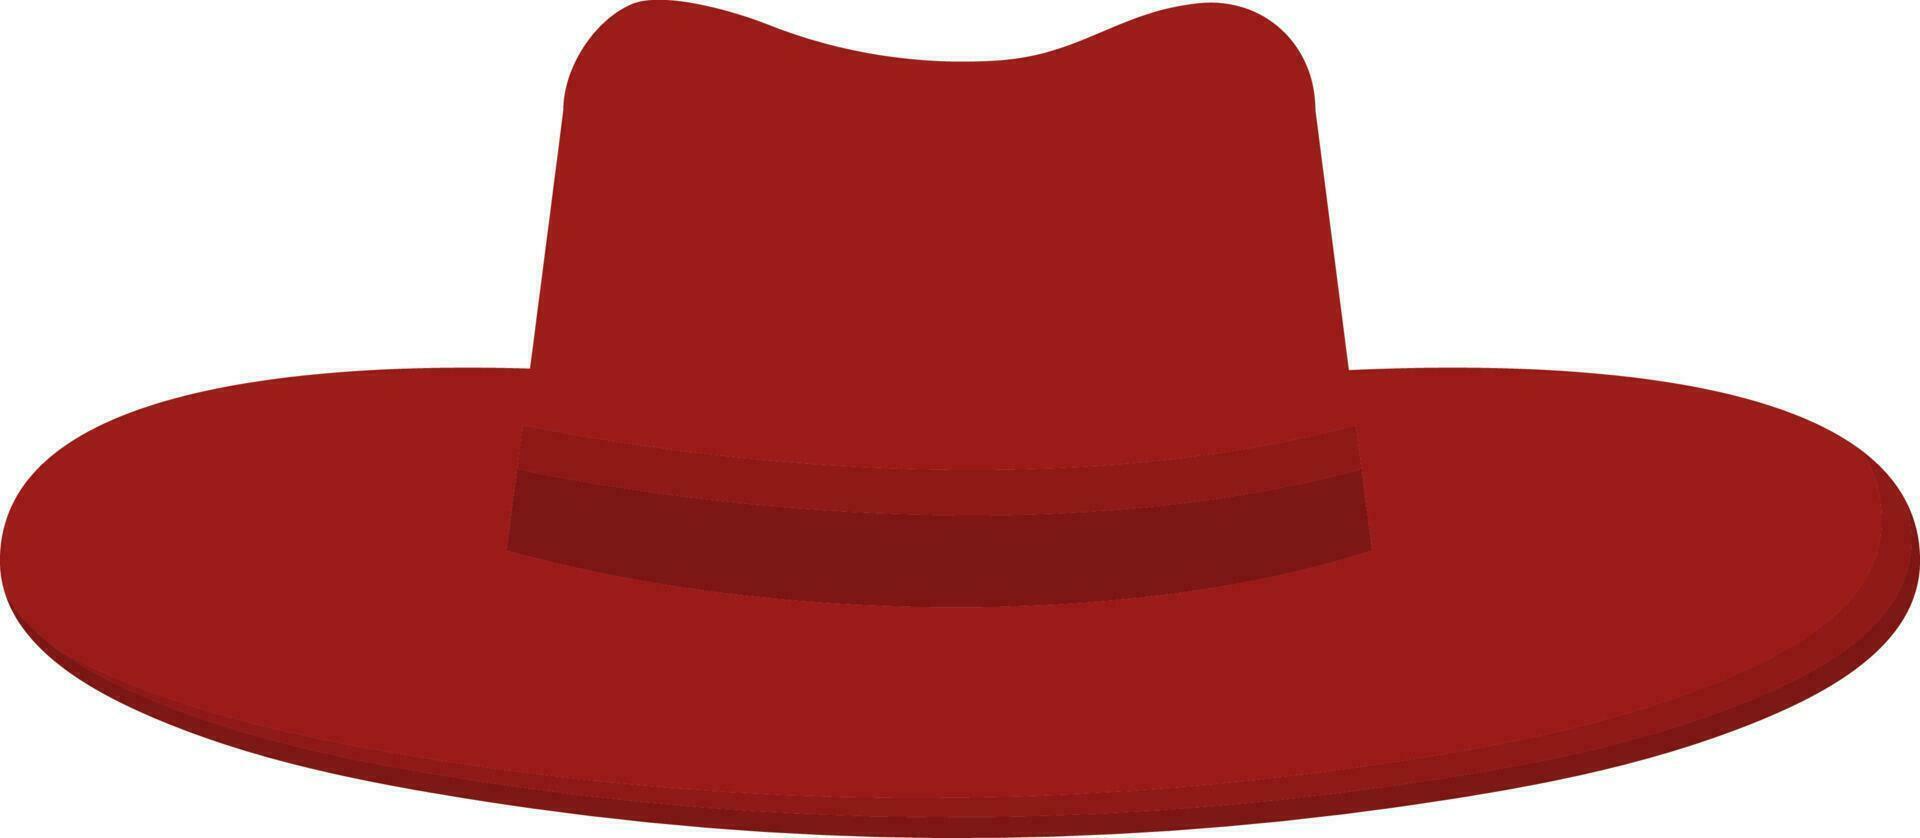 isolado vermelho árbitro chapéu ícone dentro plano estilo. vetor